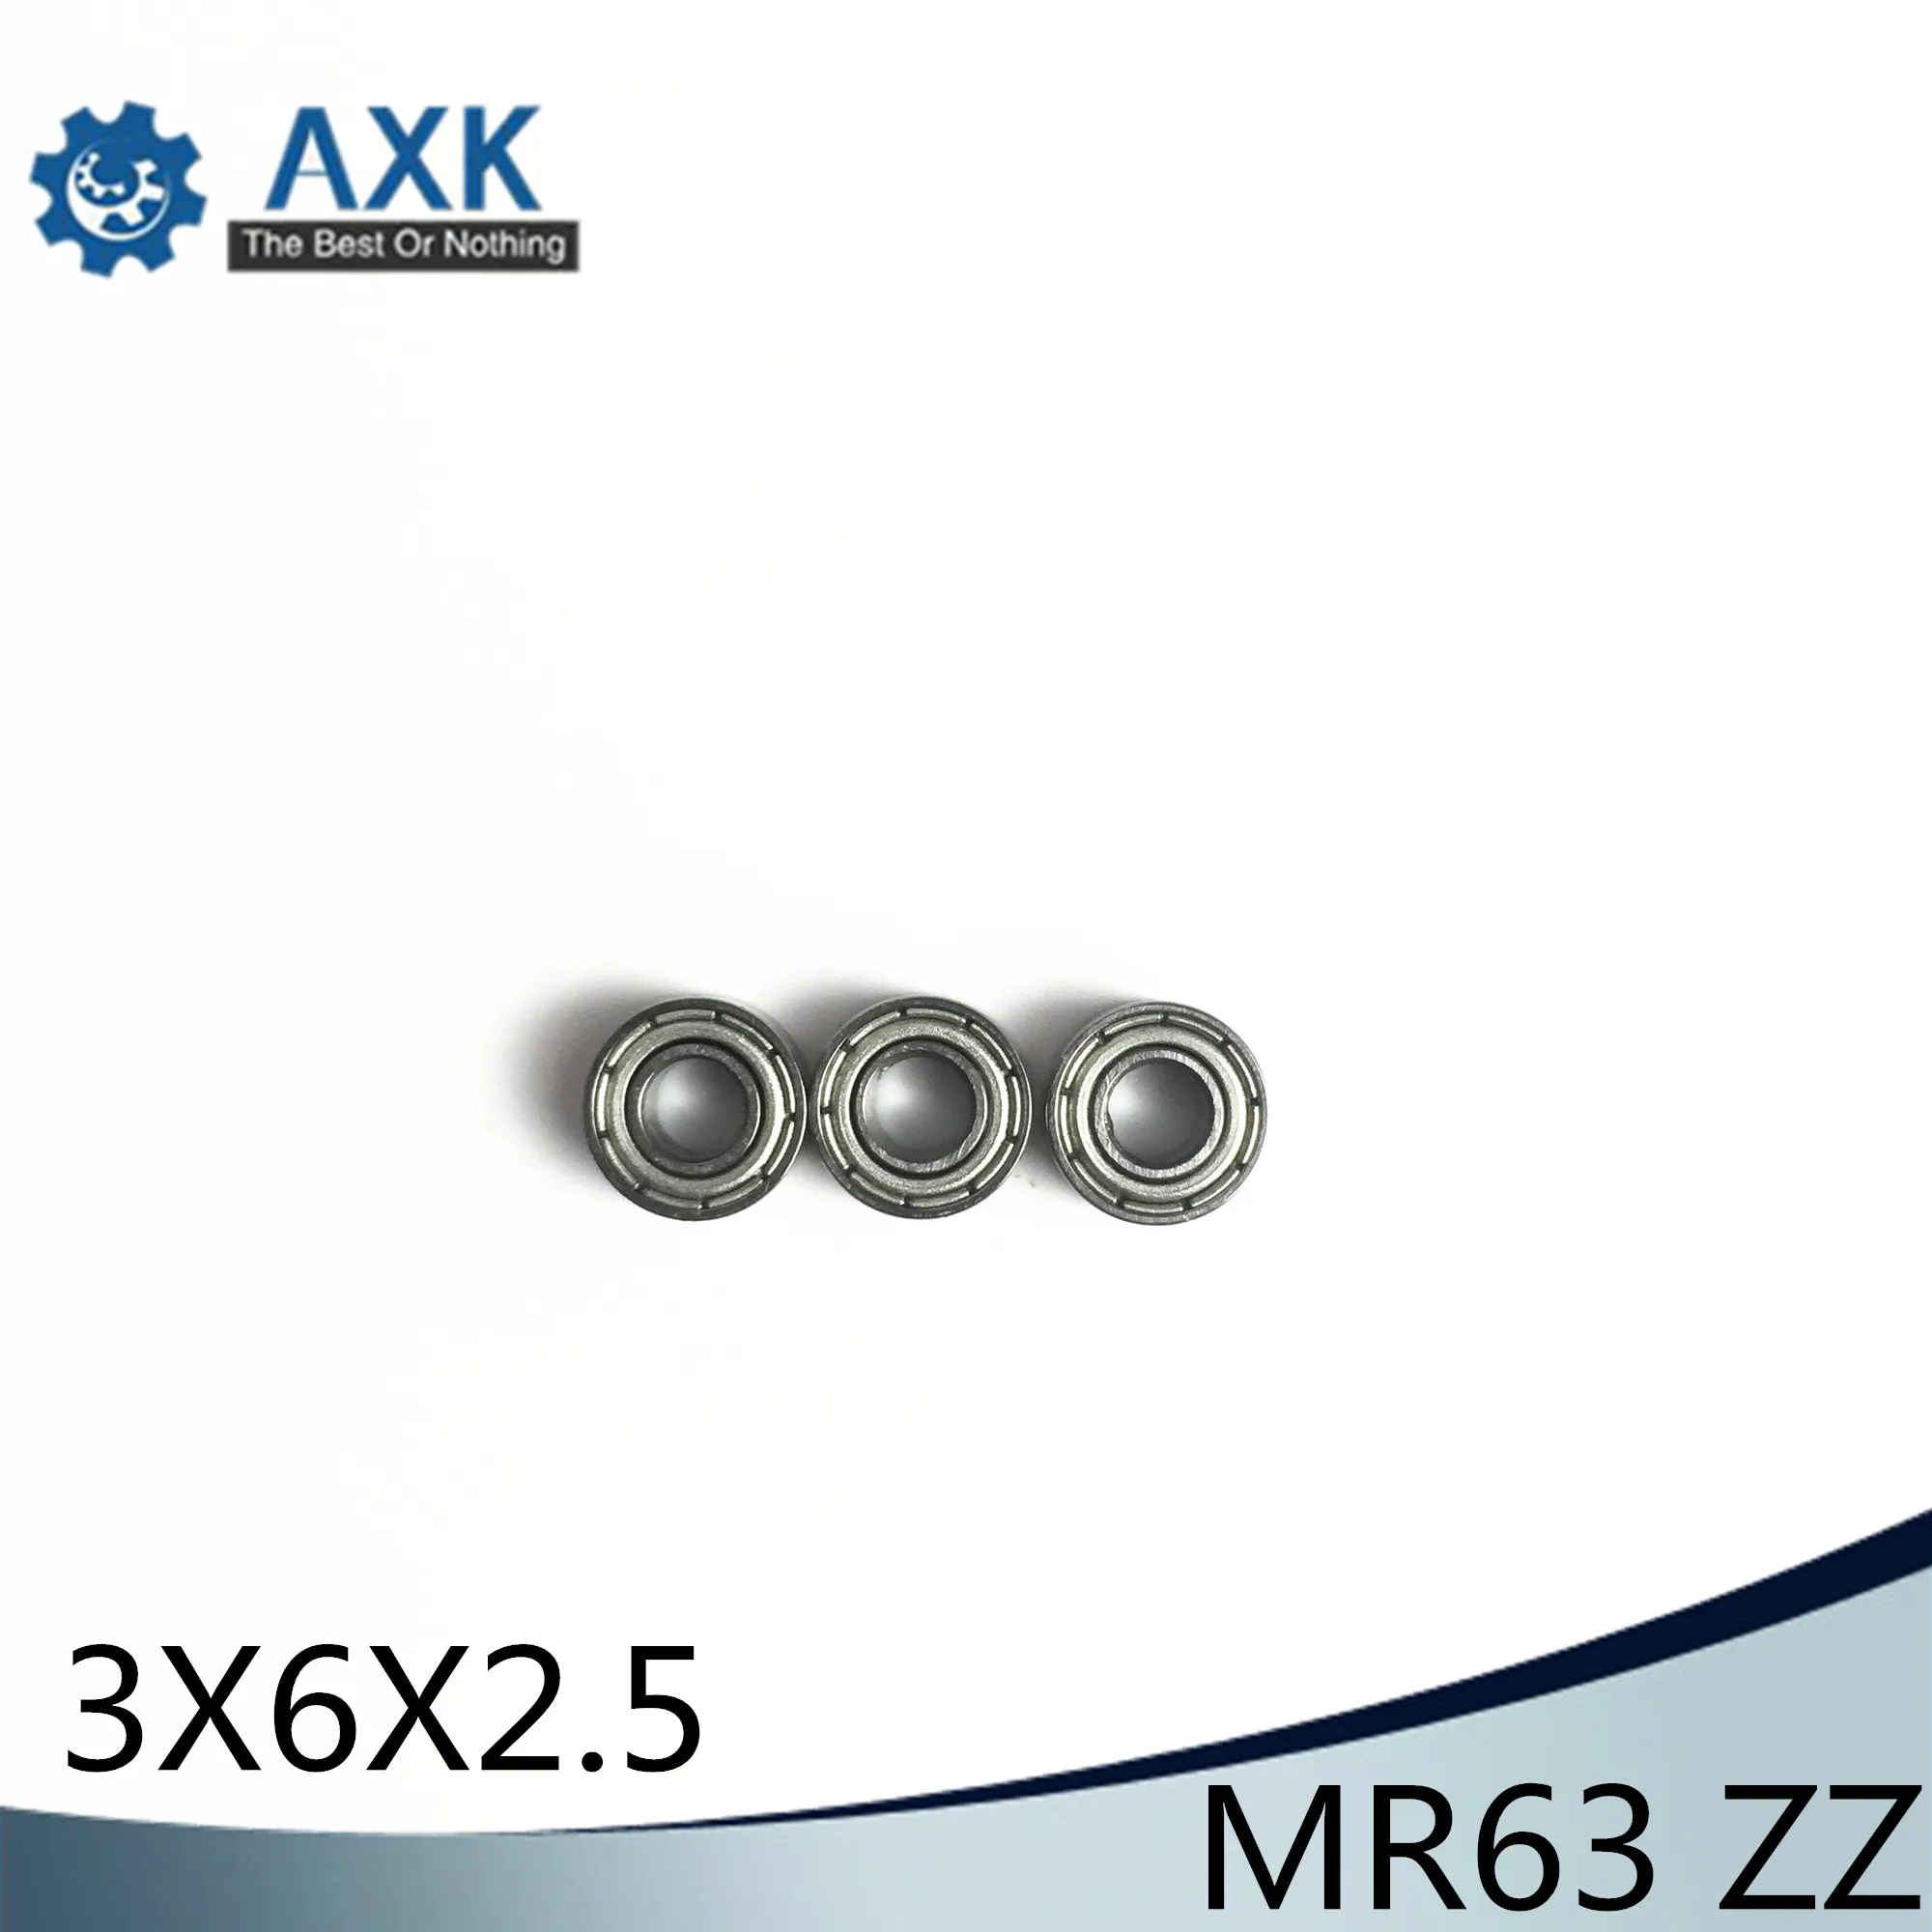 

MR63ZZ Bearing ABEC-5 (10PCS) 3*6*2.5 mm Miniature MR63 ZZ Ball Bearings L630ZZ Good Quality